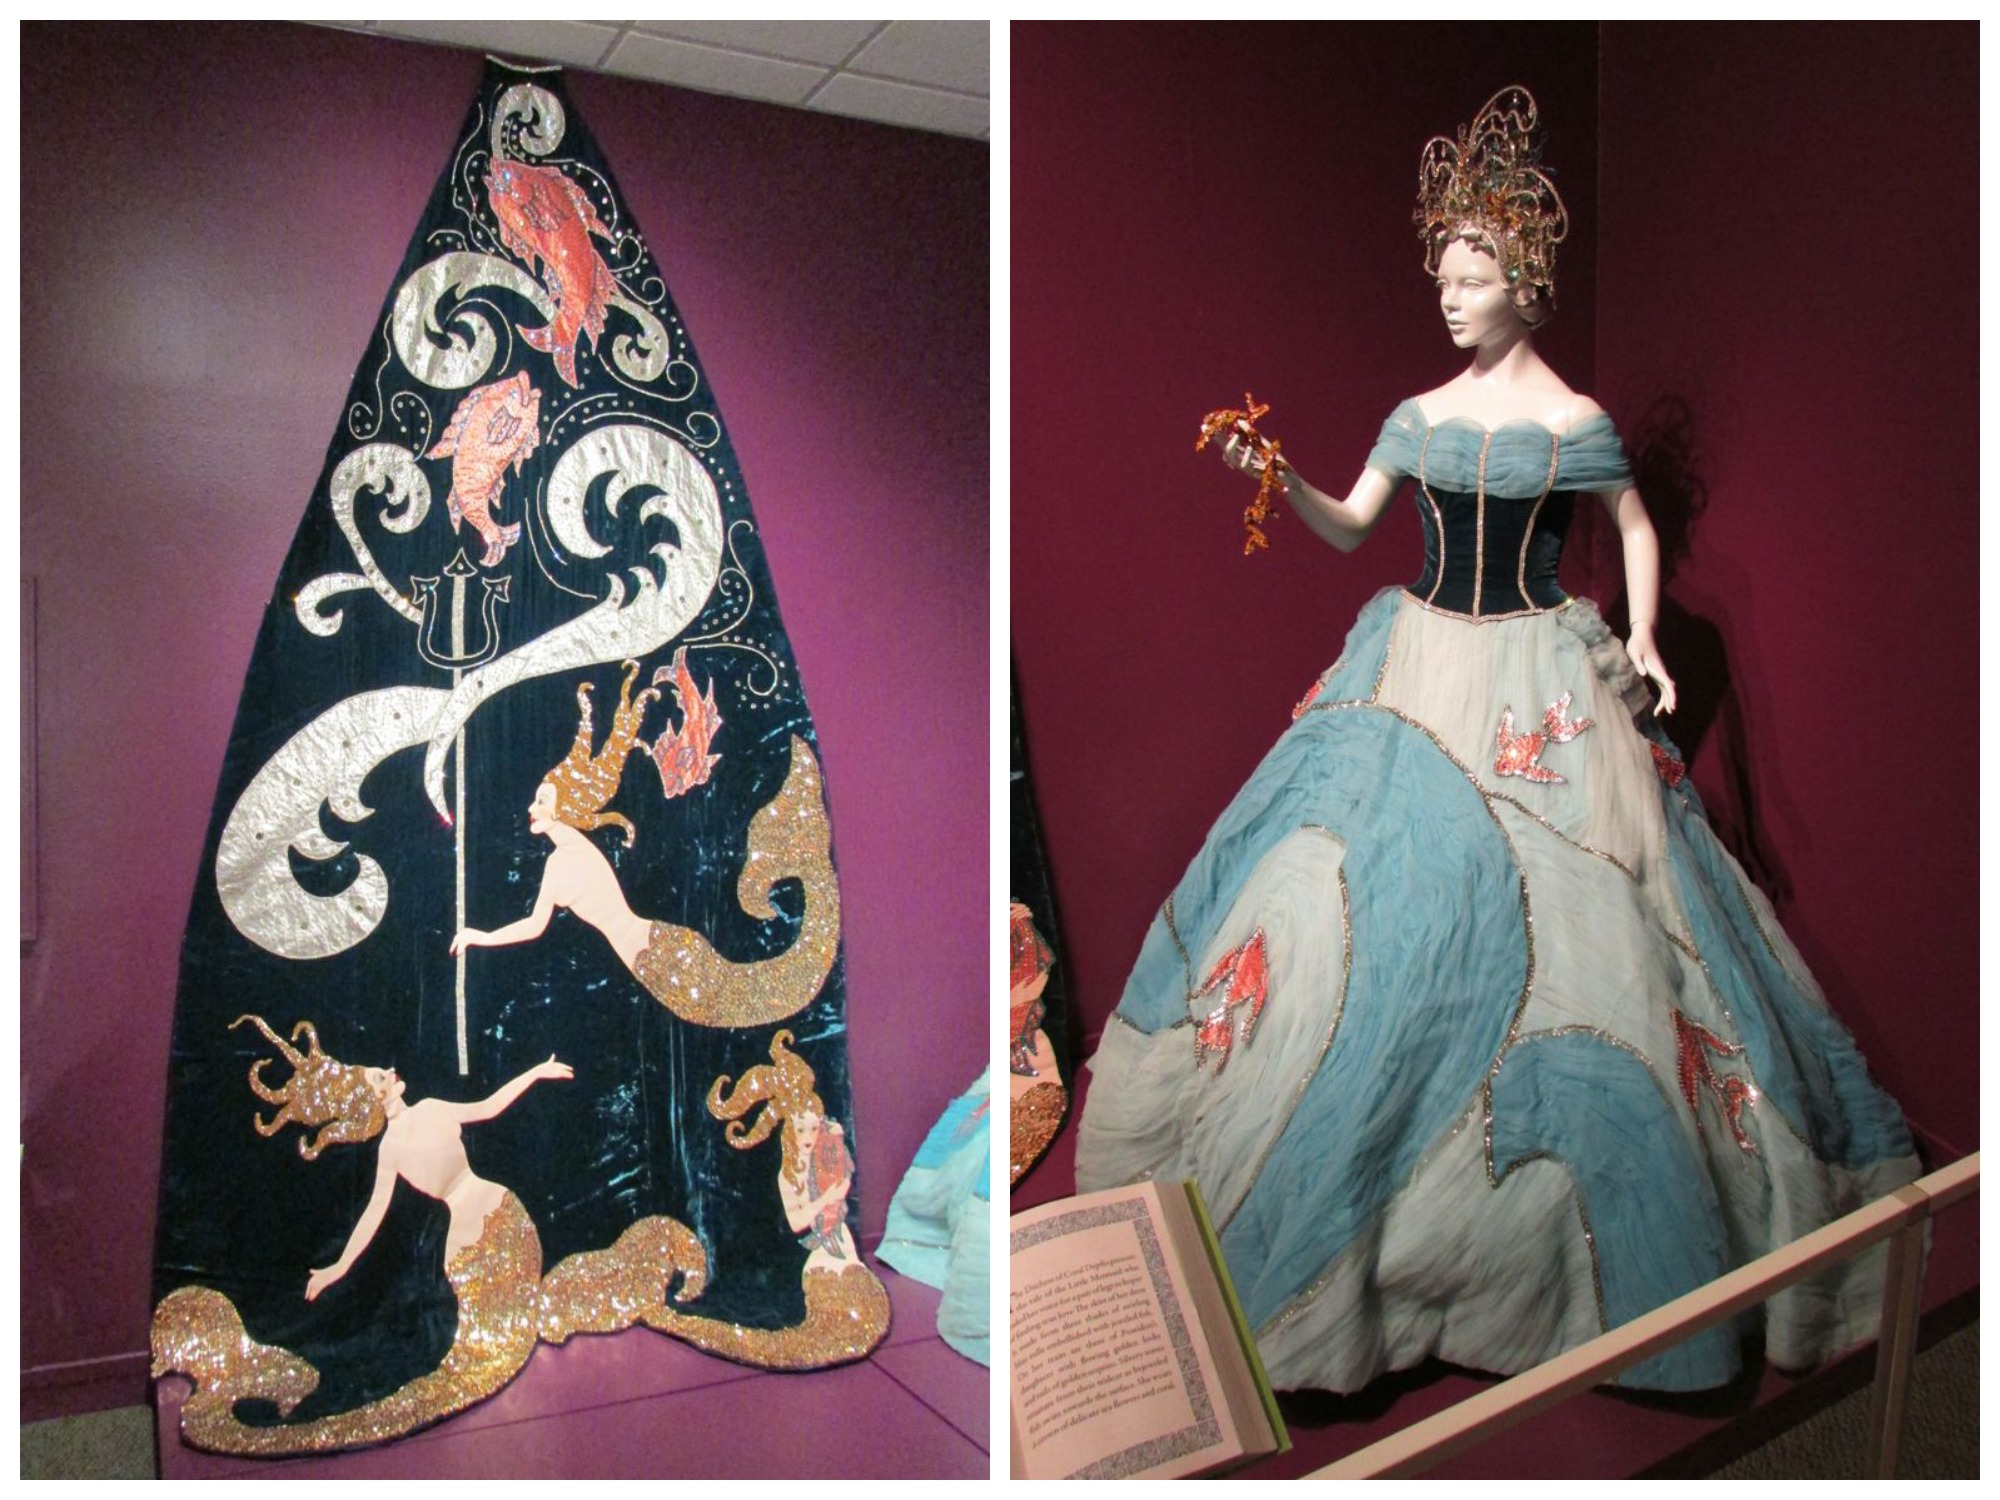 Fairytale Fiesta at the Witte Museum - The Little Mermaid | San Antonio Charter Moms